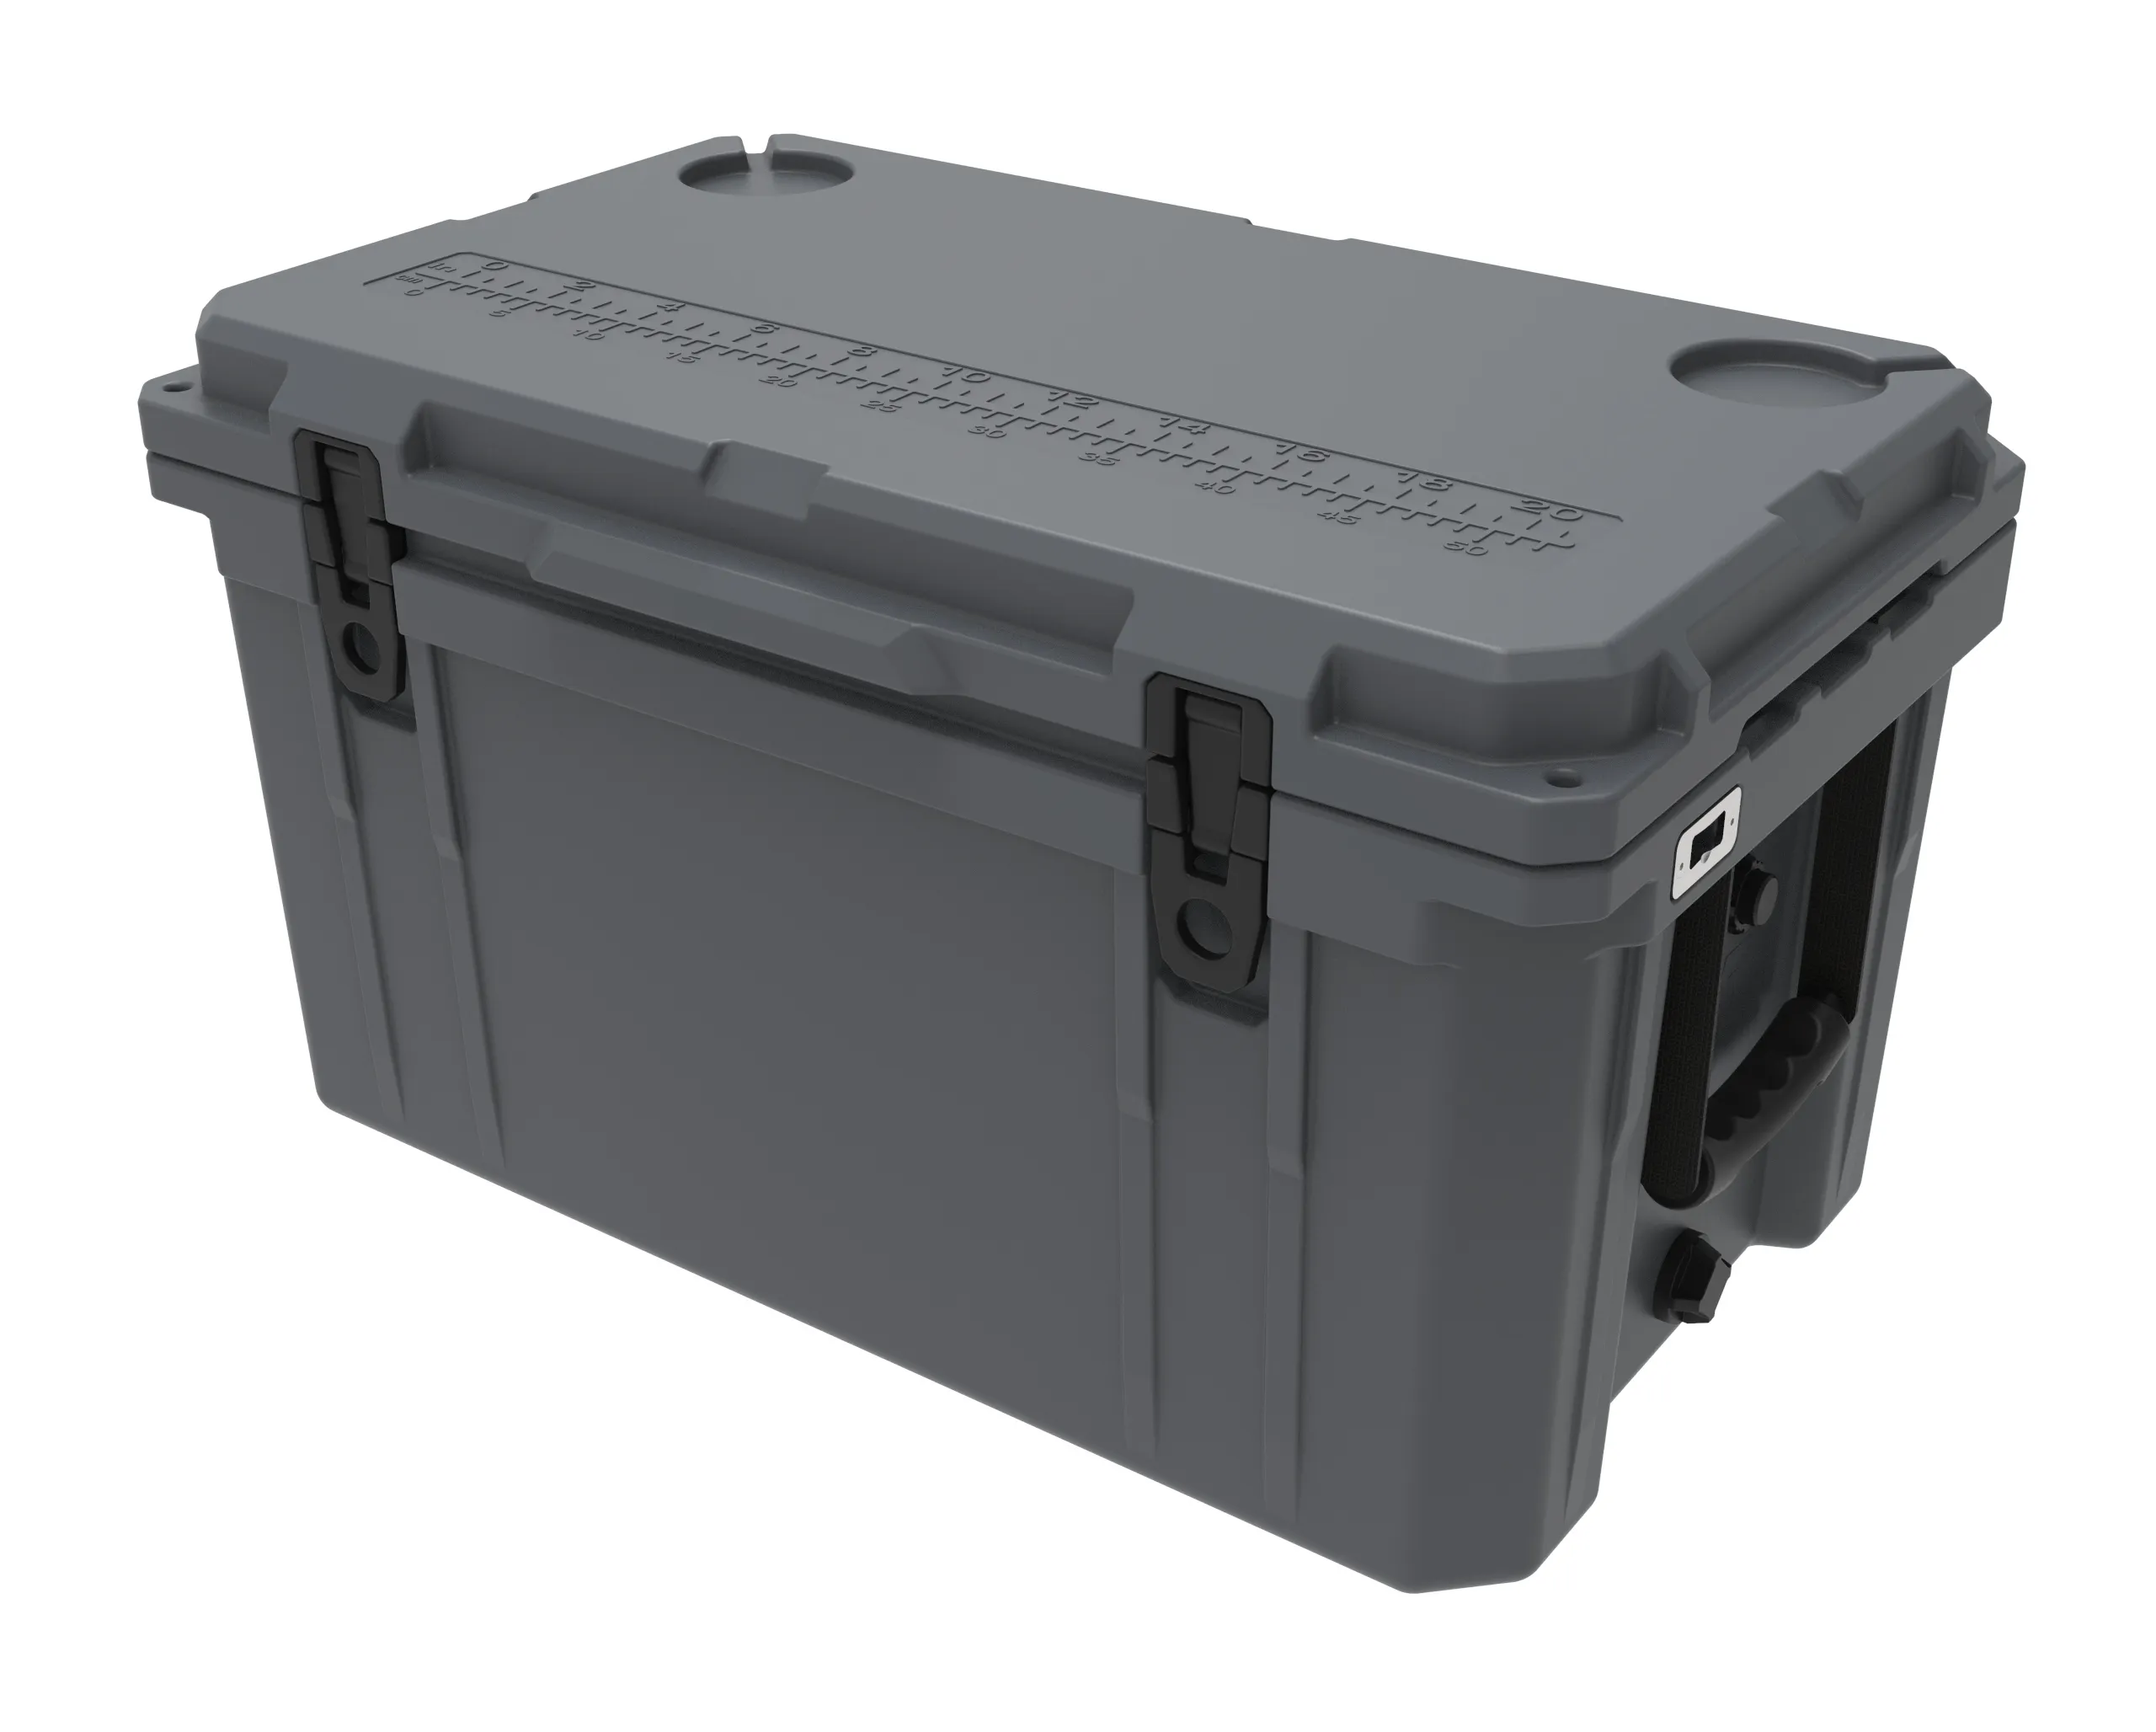 Caixa plástica portátil personalizada para acampamento e piquenique, incubadora de 45L, caixa térmica de plástico à prova d'água